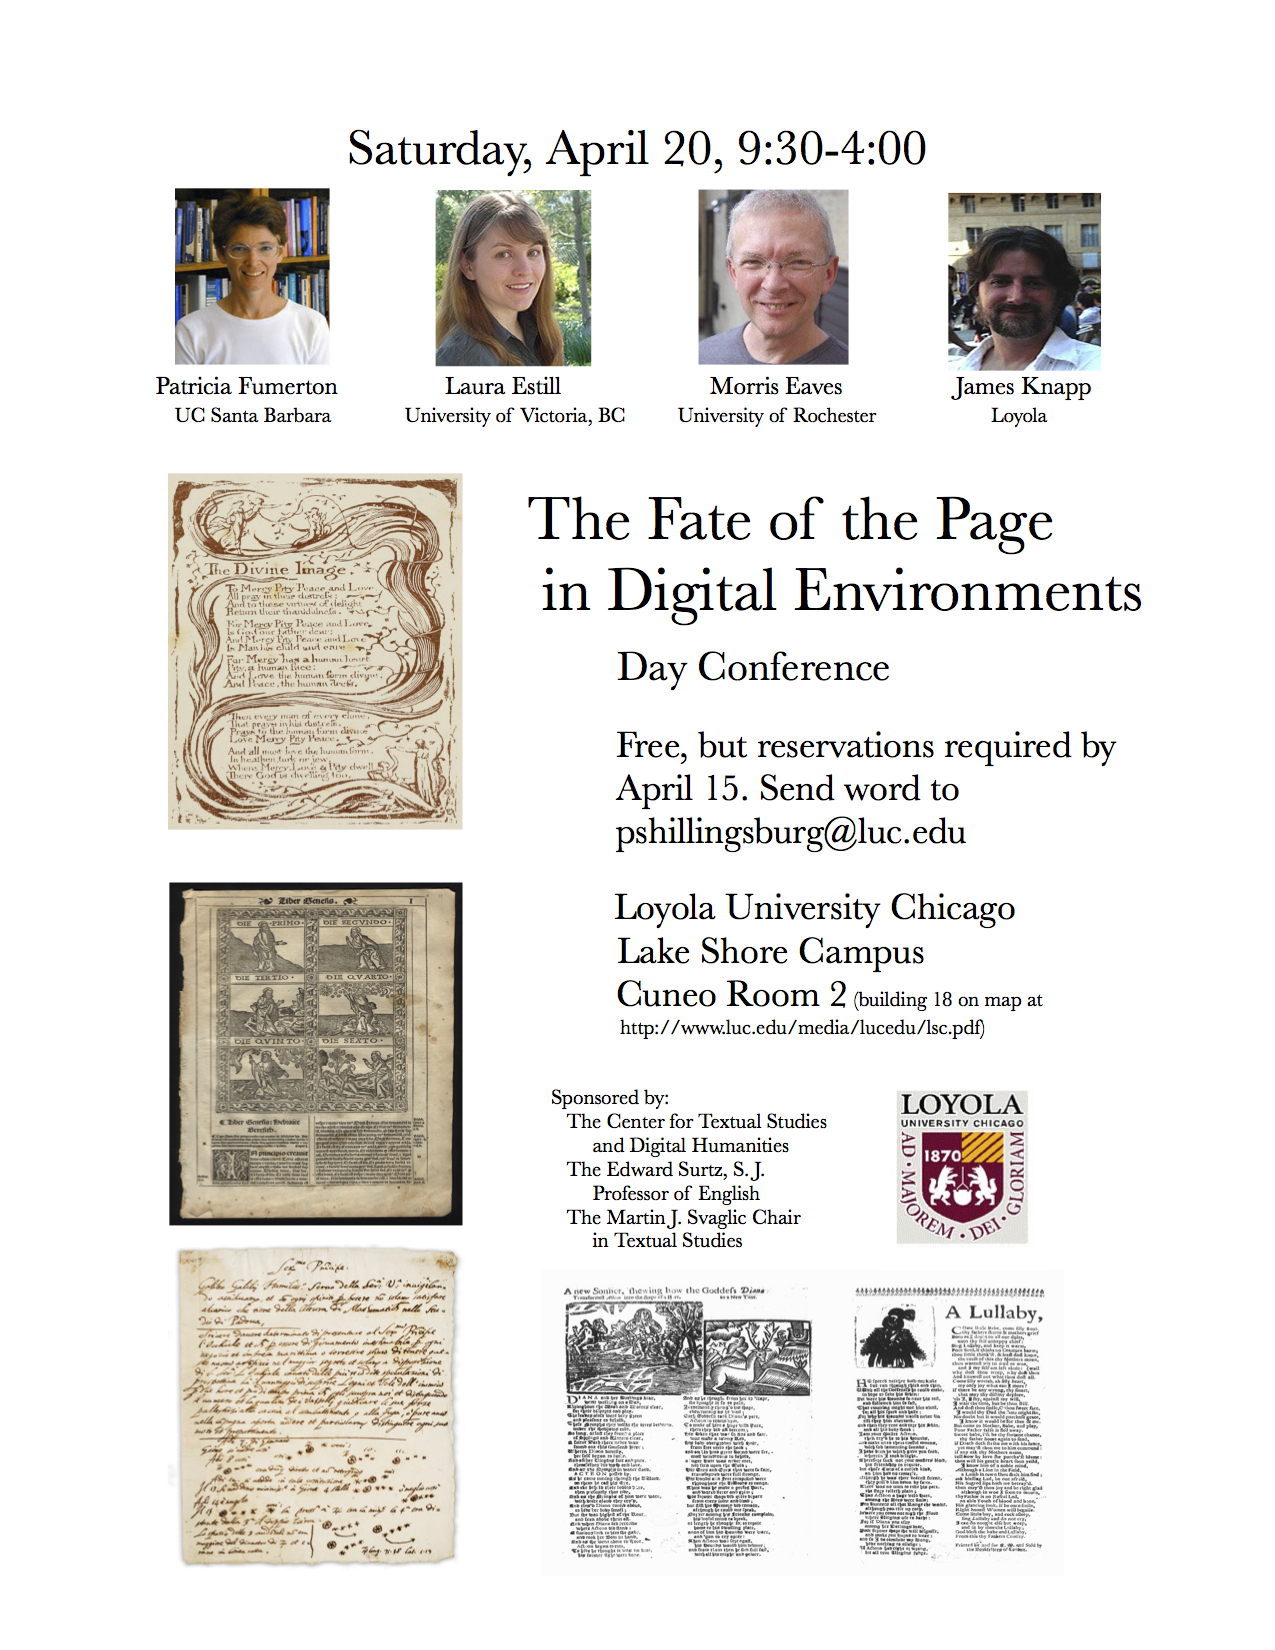 The Fate of the Page in Digital Environments - Patricia Fumerton (UC Santa Barbara), Laura Estill (U Victoria, BC), Morris Eaves (U Rochester), James Knapp (Loyola Chicago), April 20, 2013